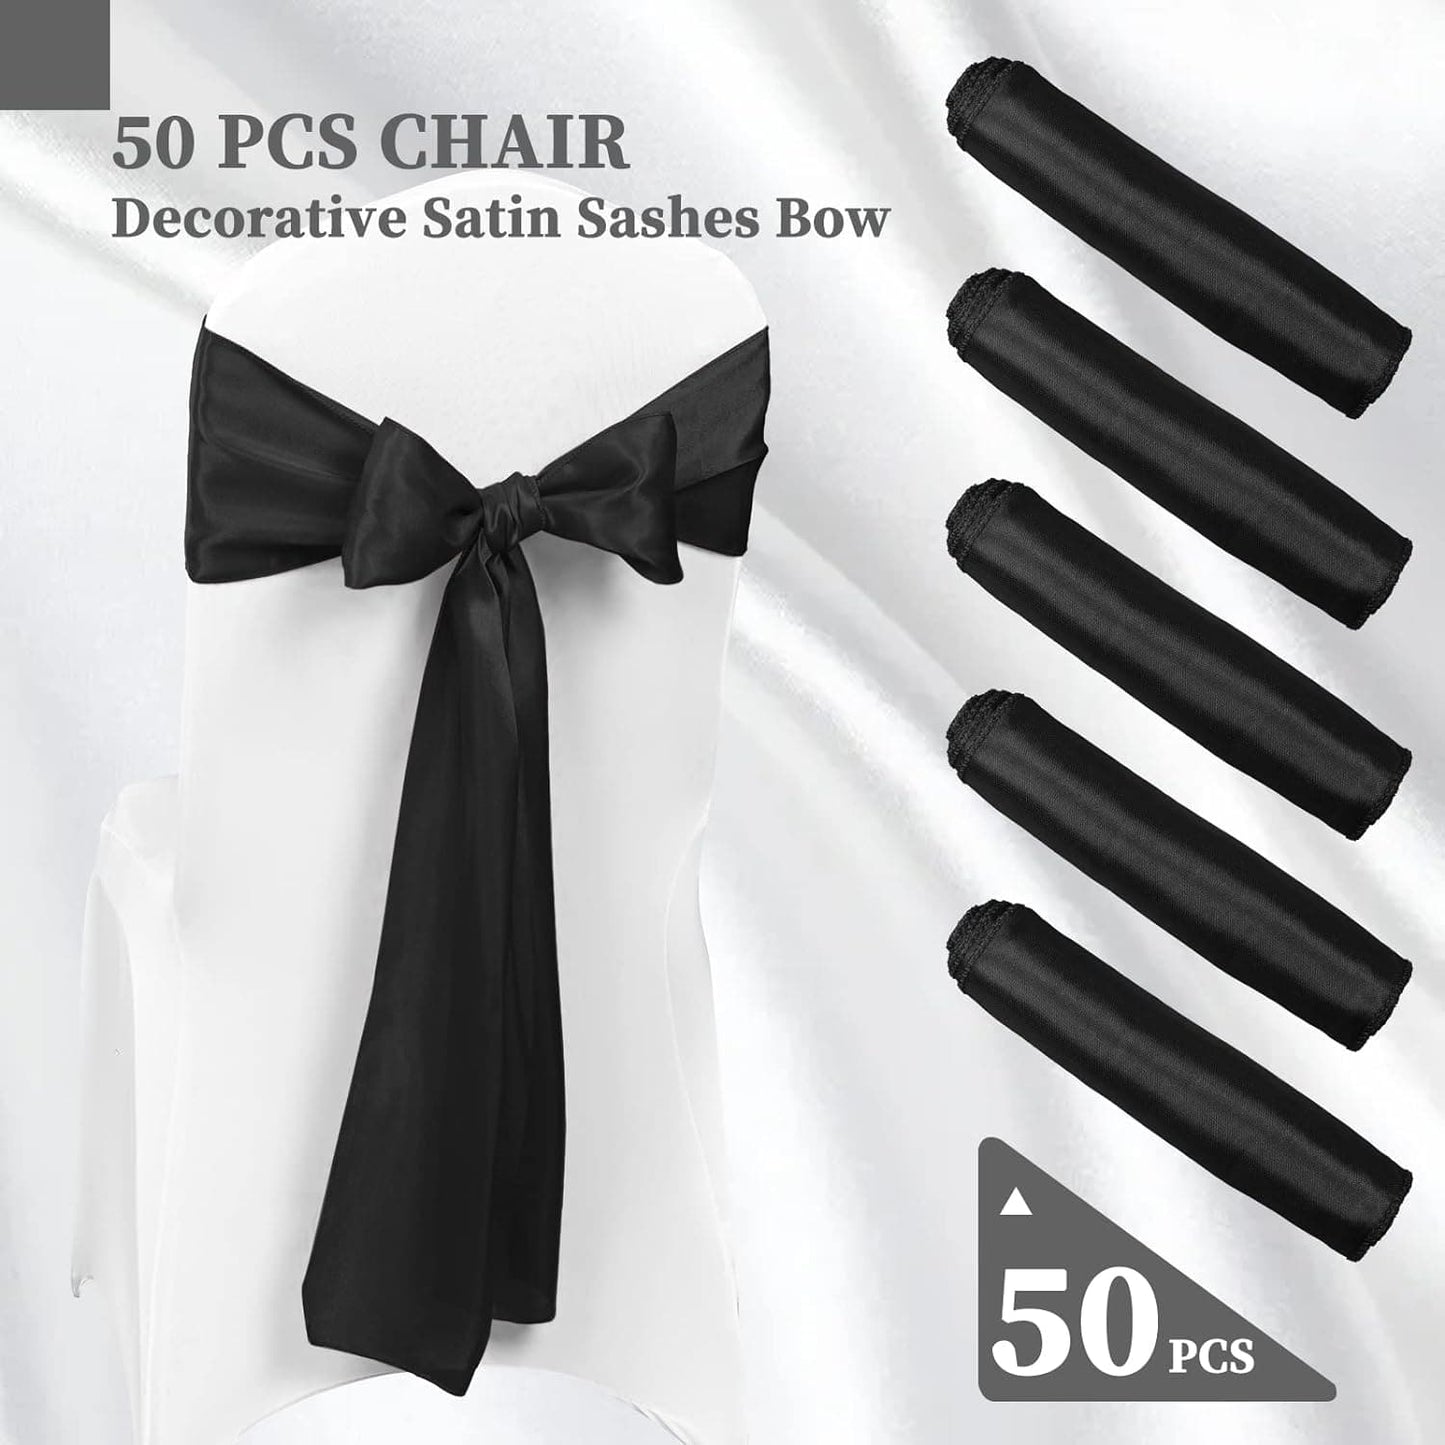 50 PCS Kitchen Satin Chair Sash